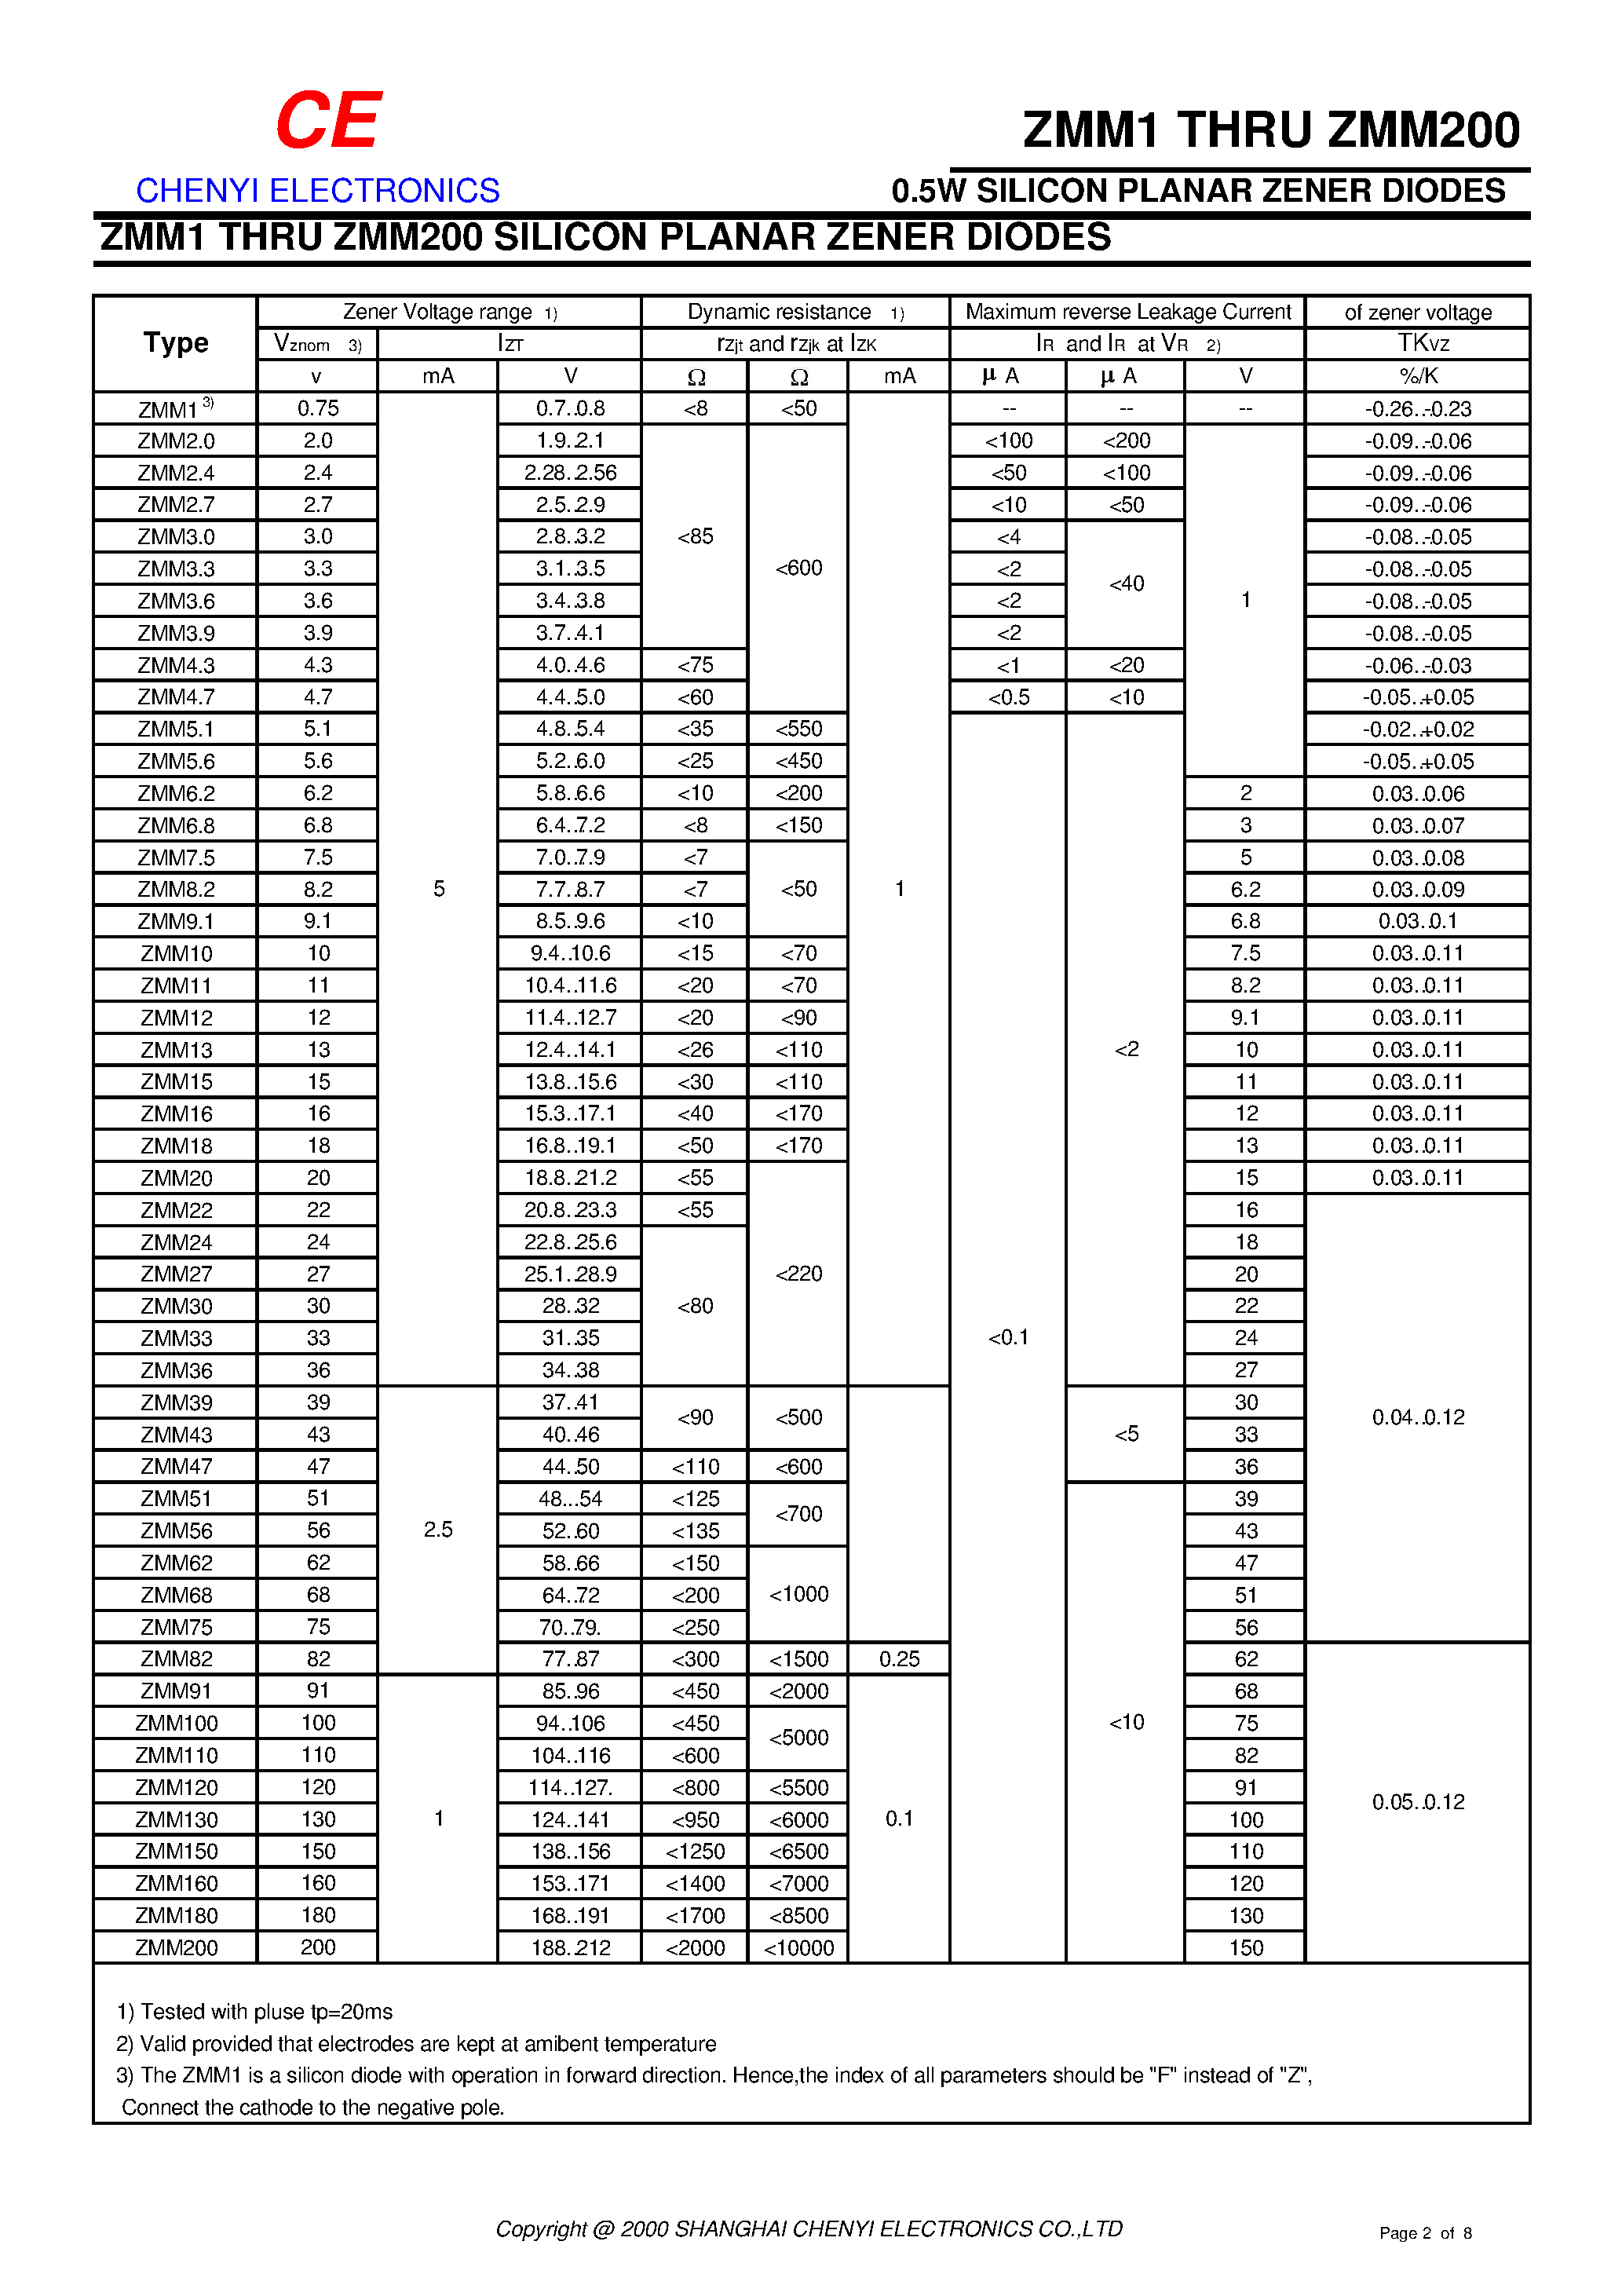 Datasheet ZMM200 - 0.5W SILICON PLANAR ZENER DIODES page 2